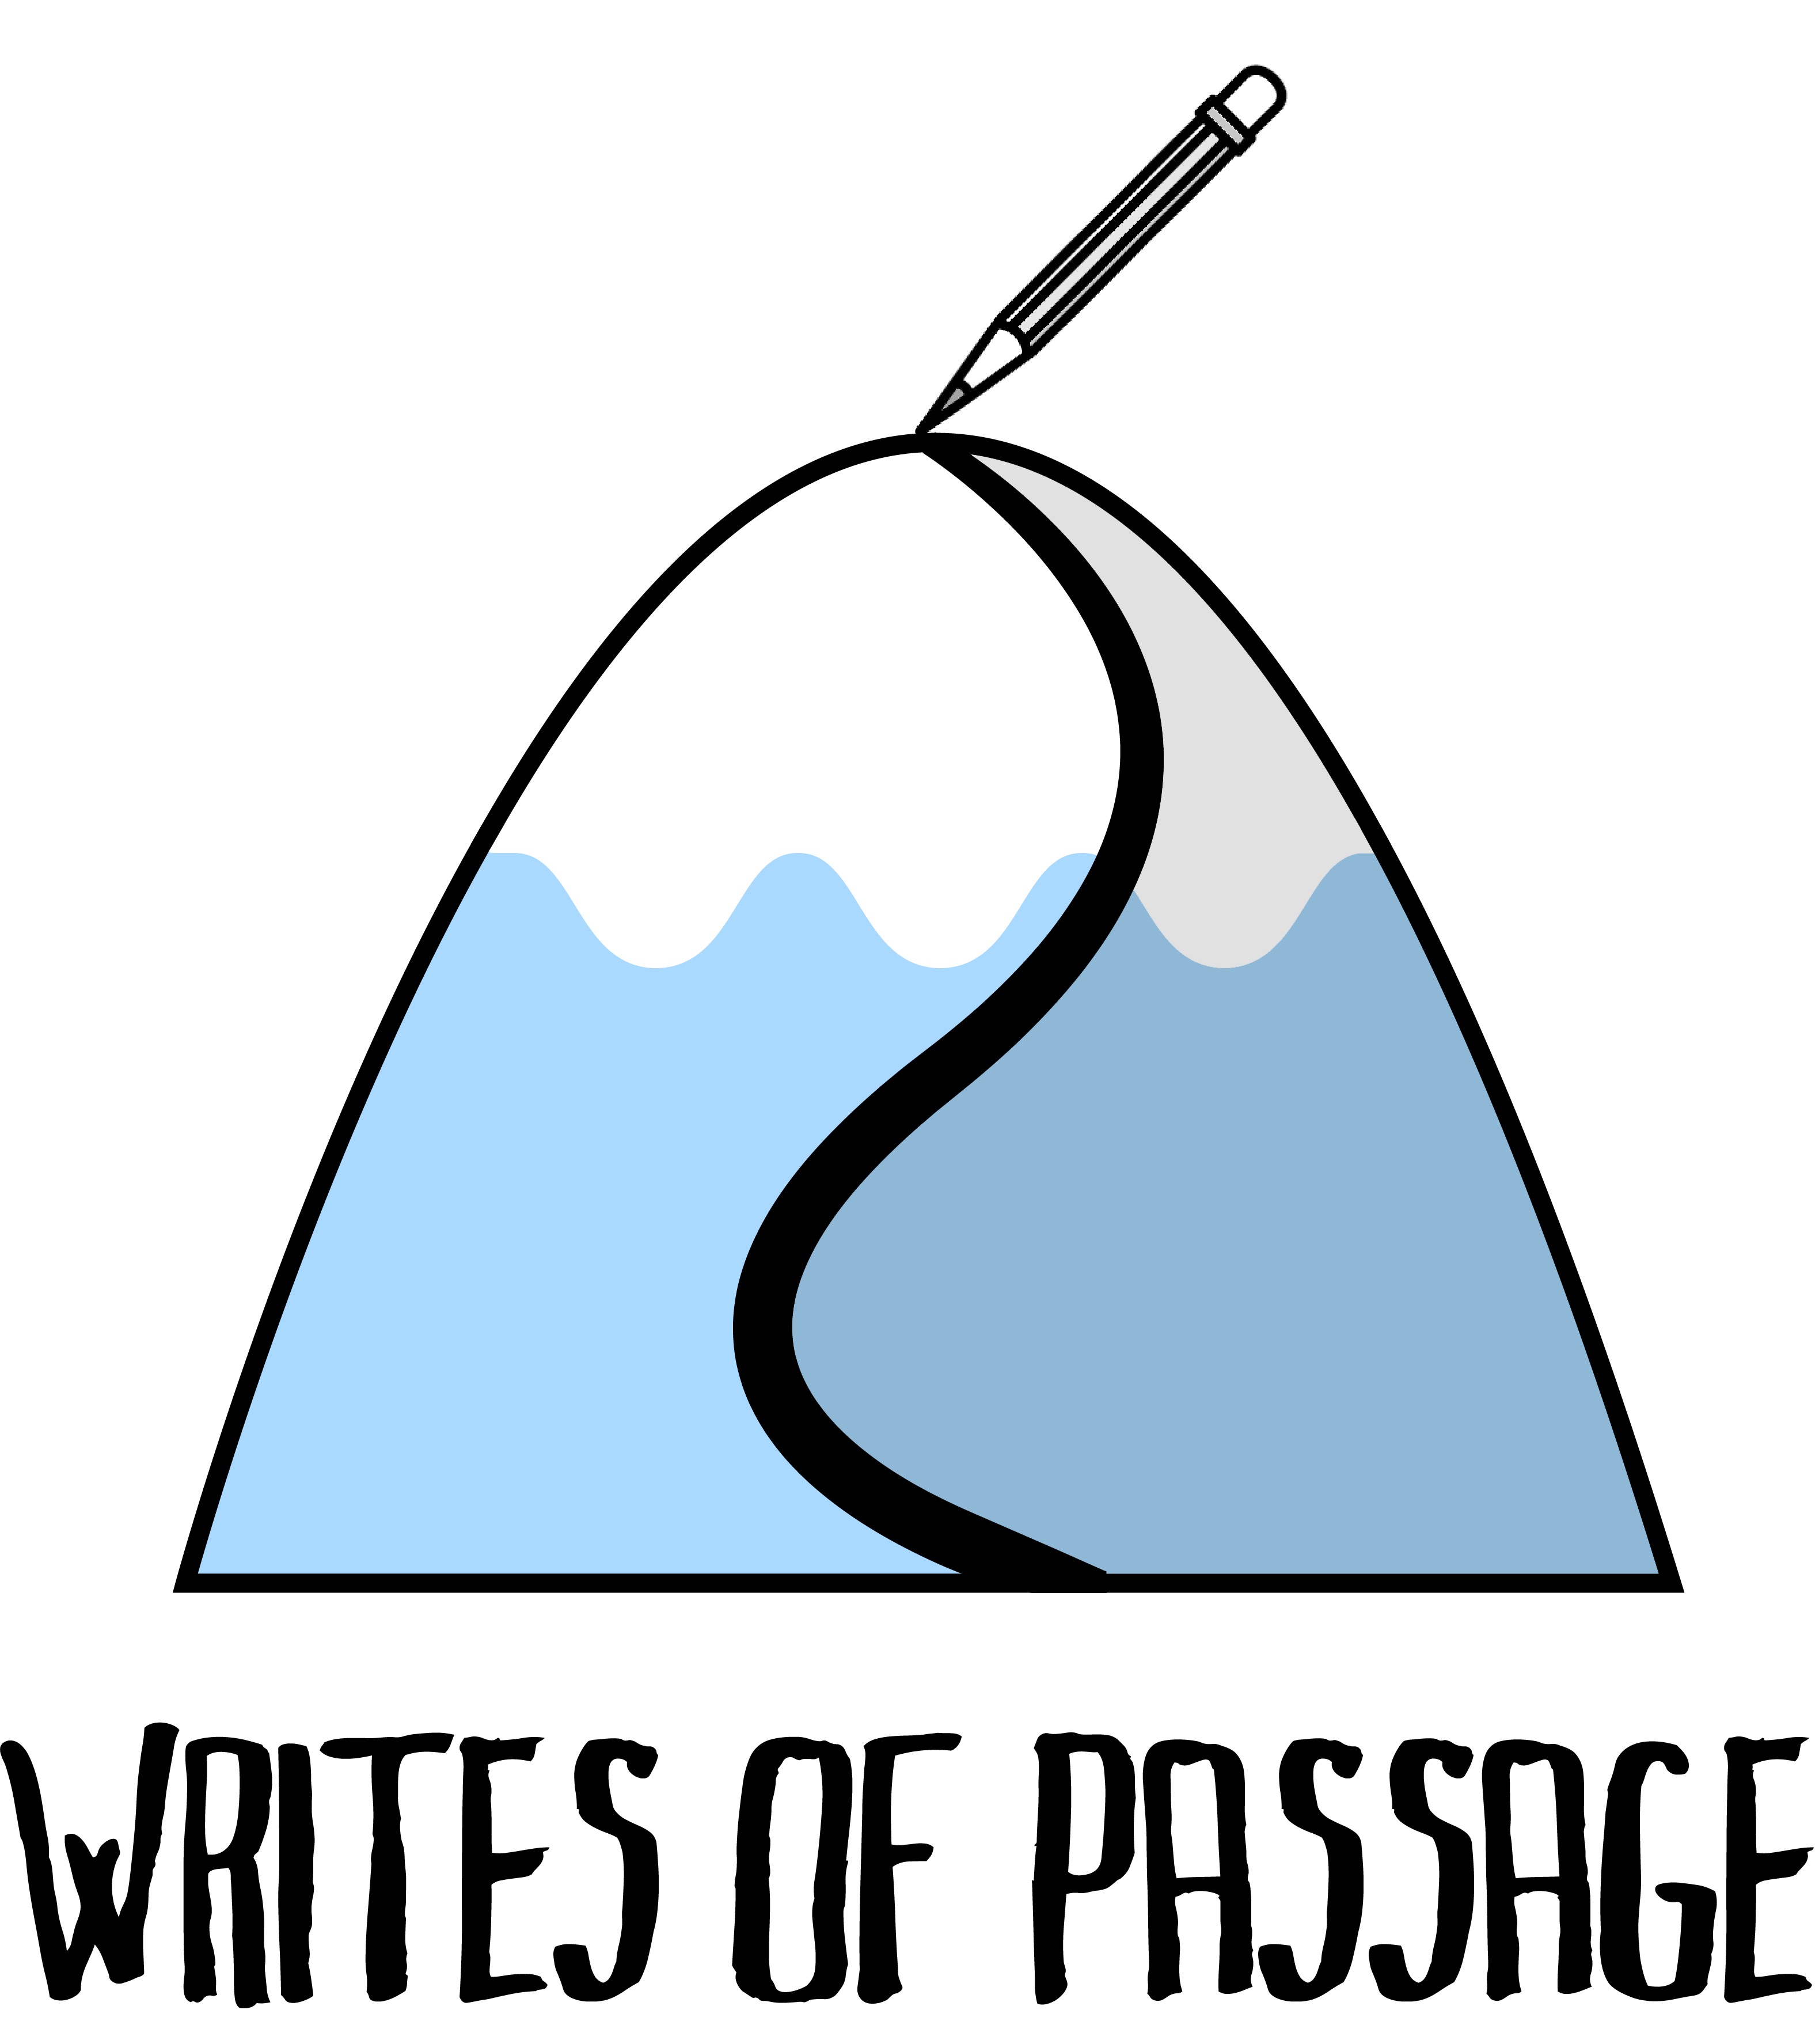 Writes of Passage Retreats